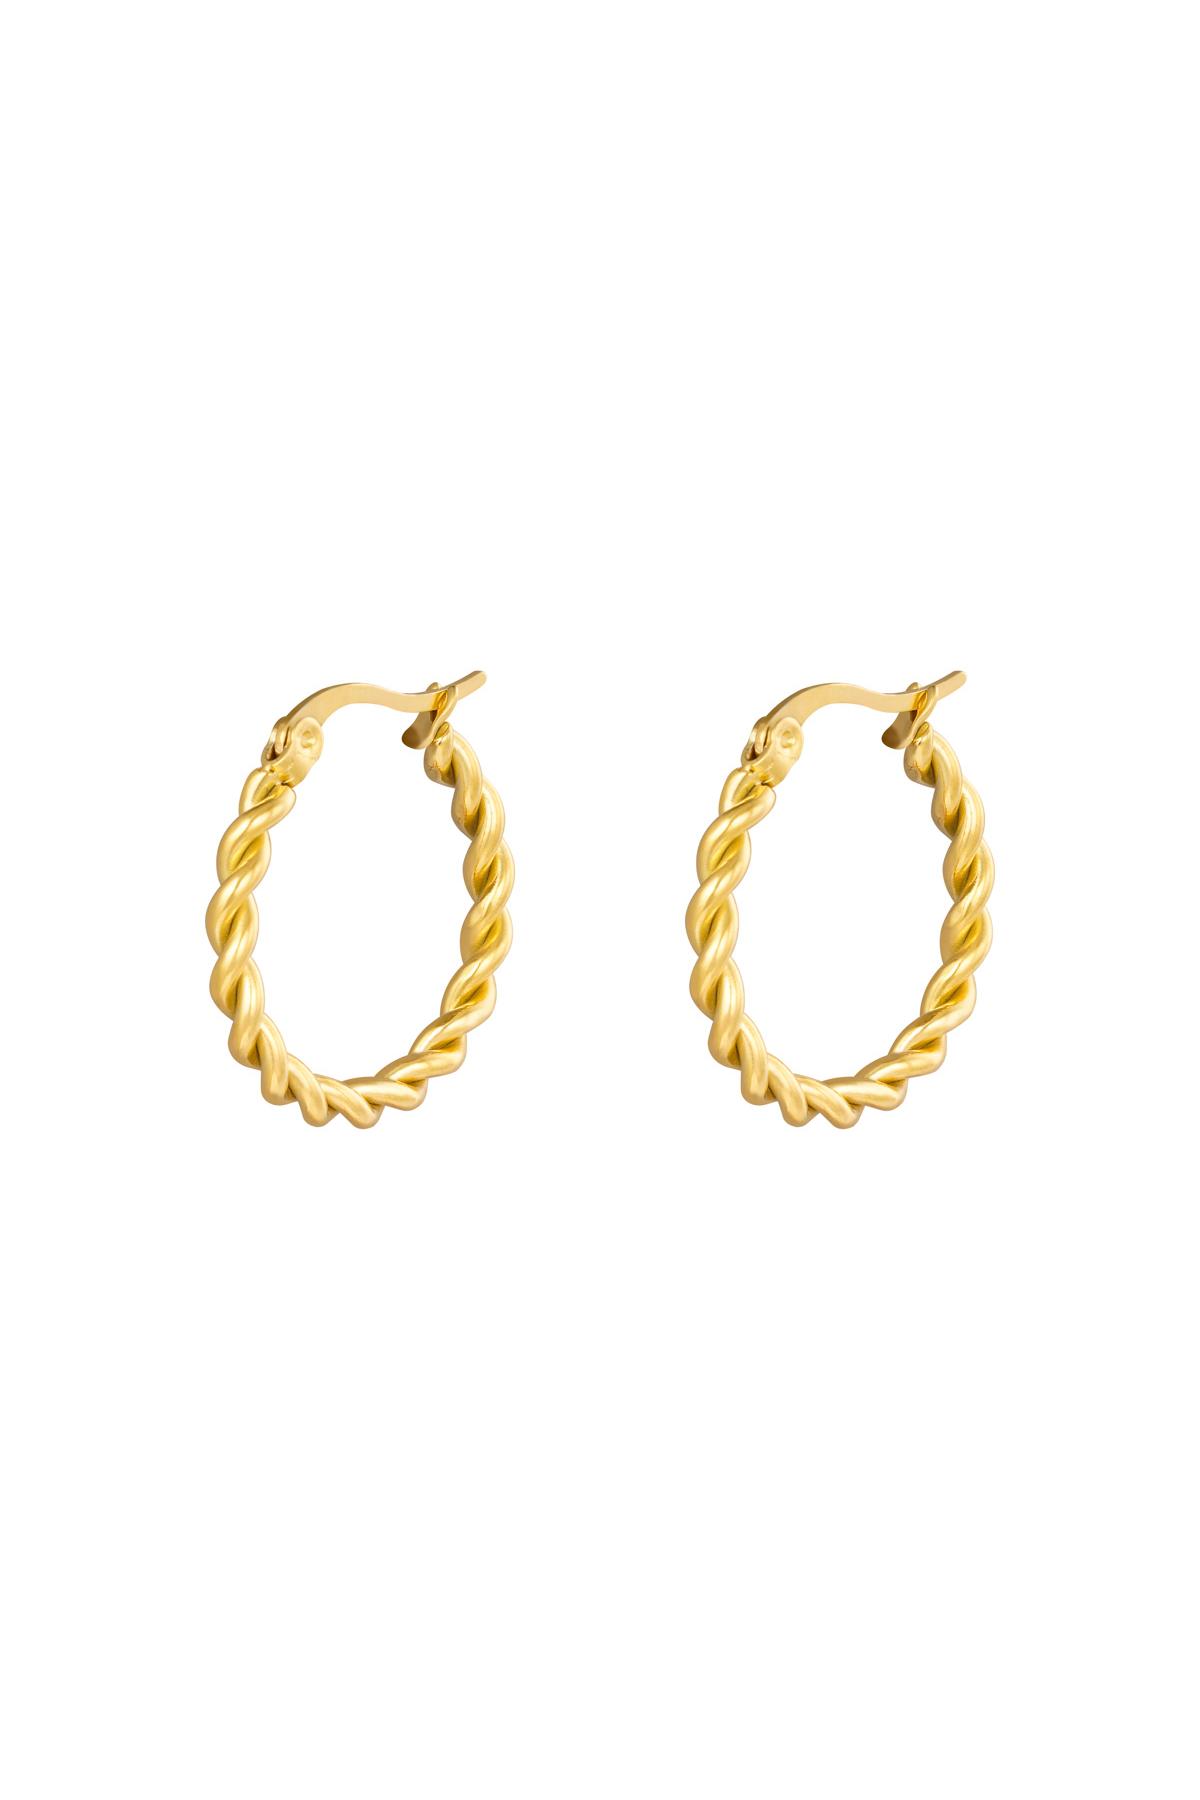 Gold / Earrings Hoops Twine 22 mm Gold Stainless Steel 